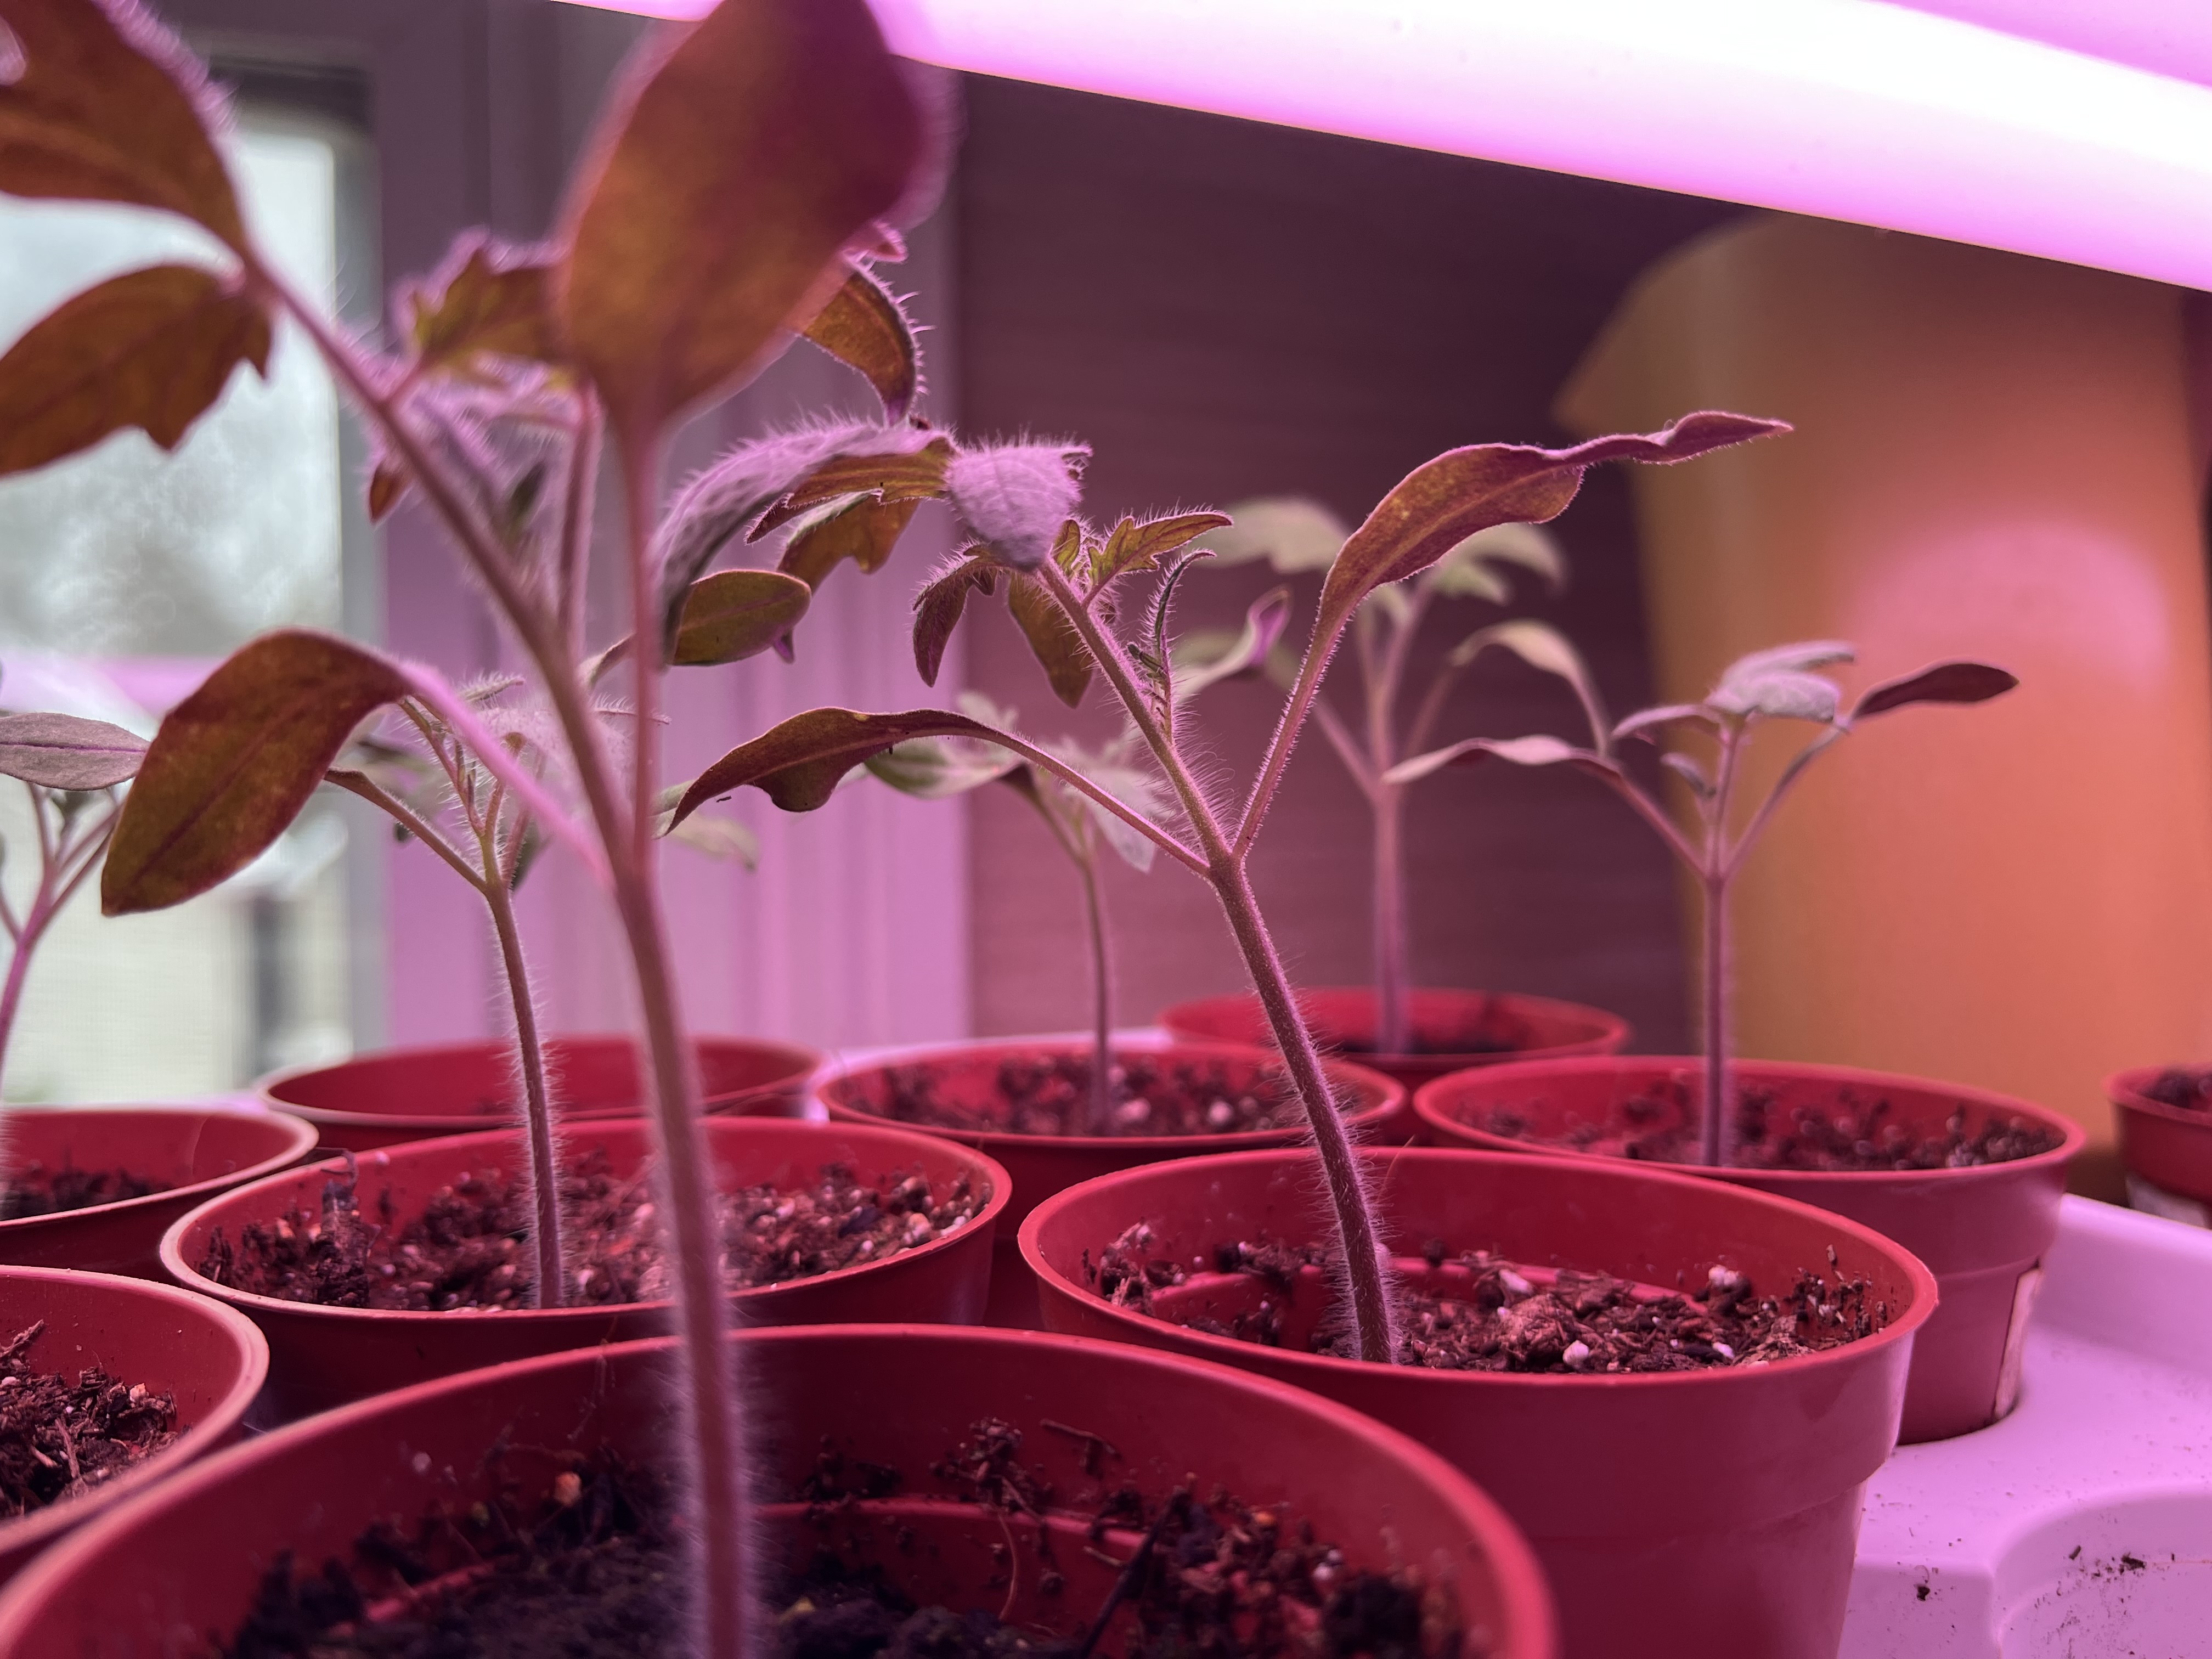 Tyffanie's baby tomato seedlings on April 14, 2022